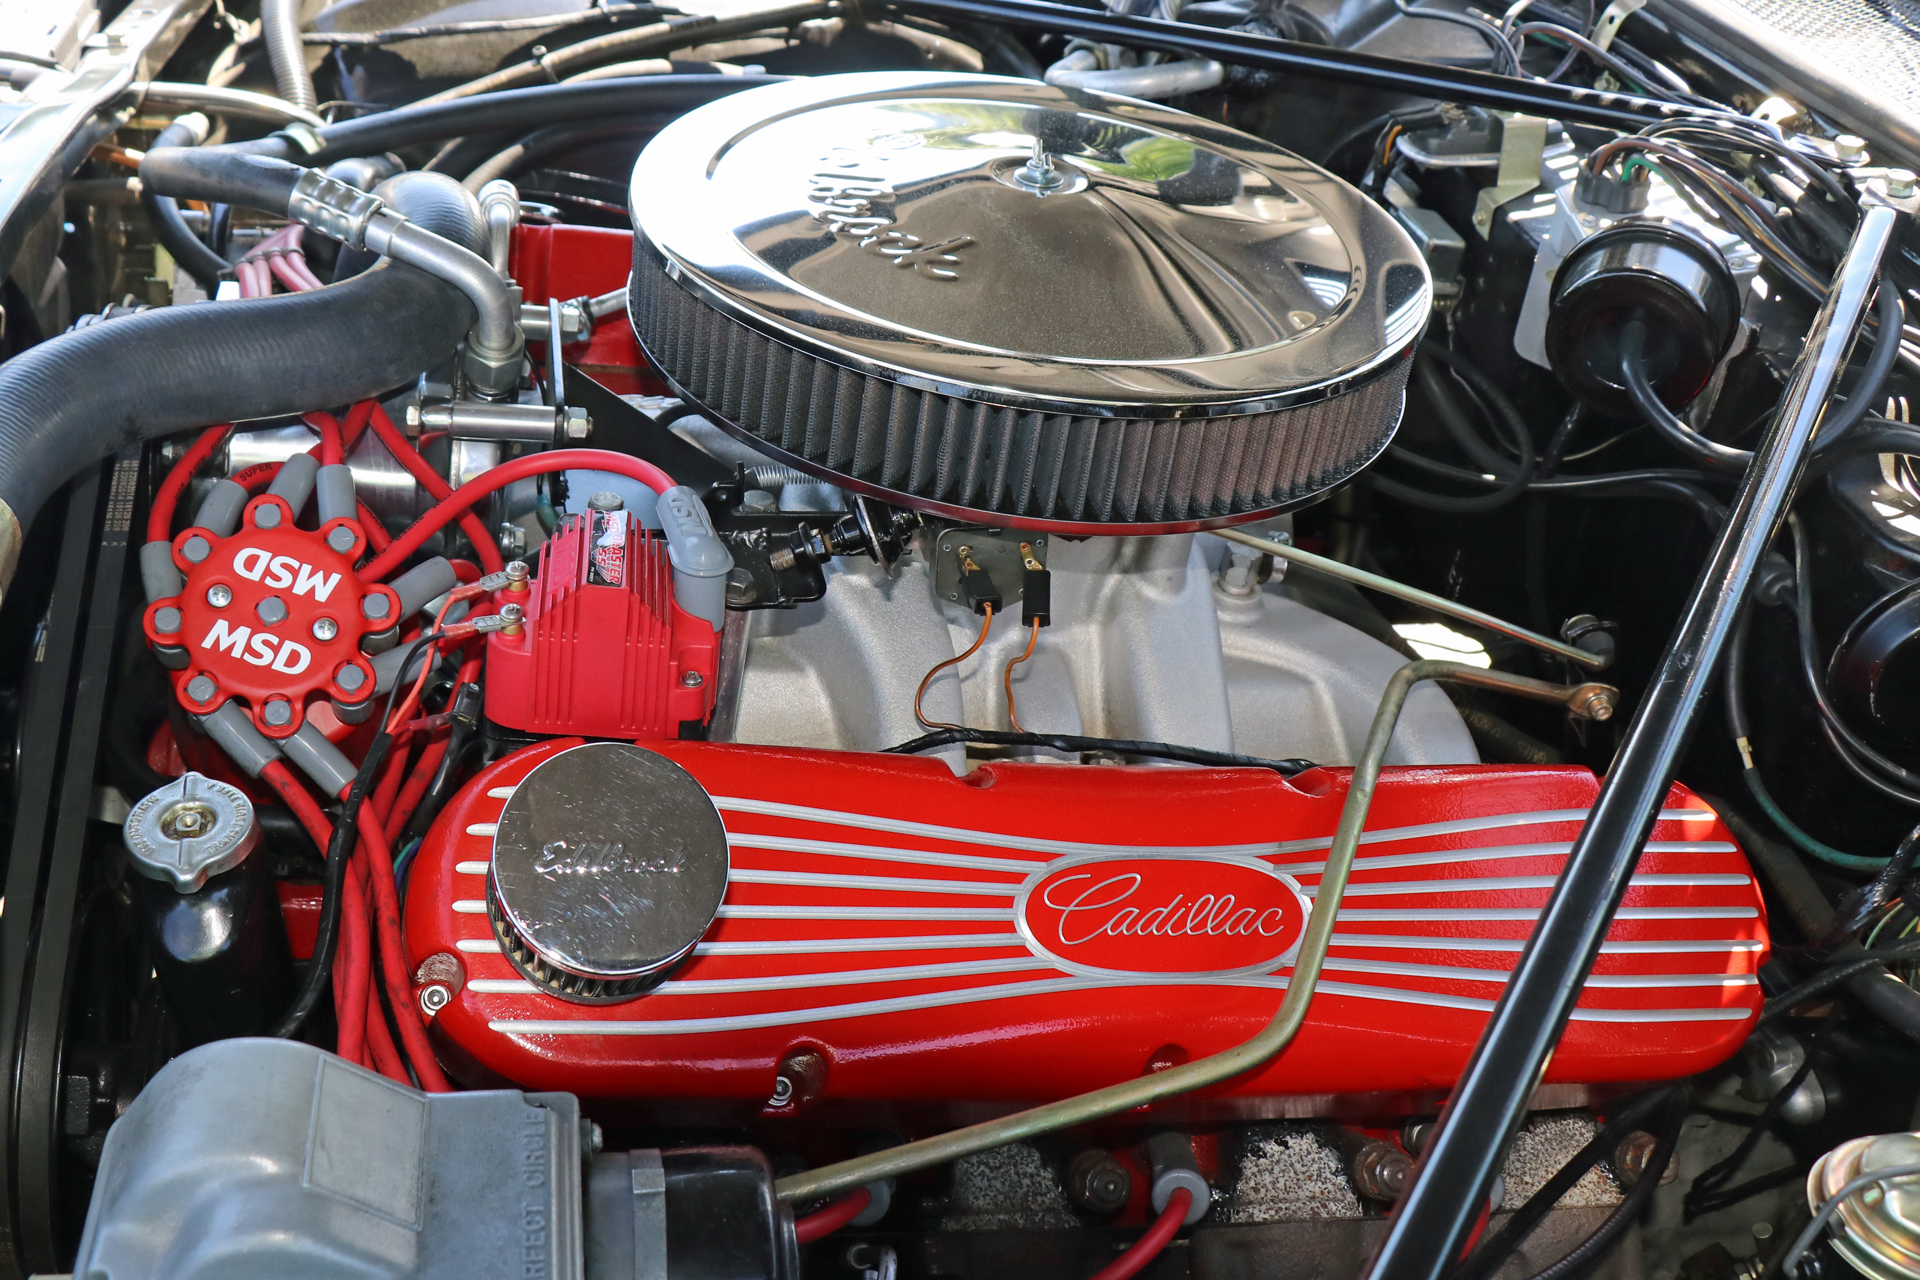 070-1968 Cadillac DeVille convertible 05. Eiere, 0